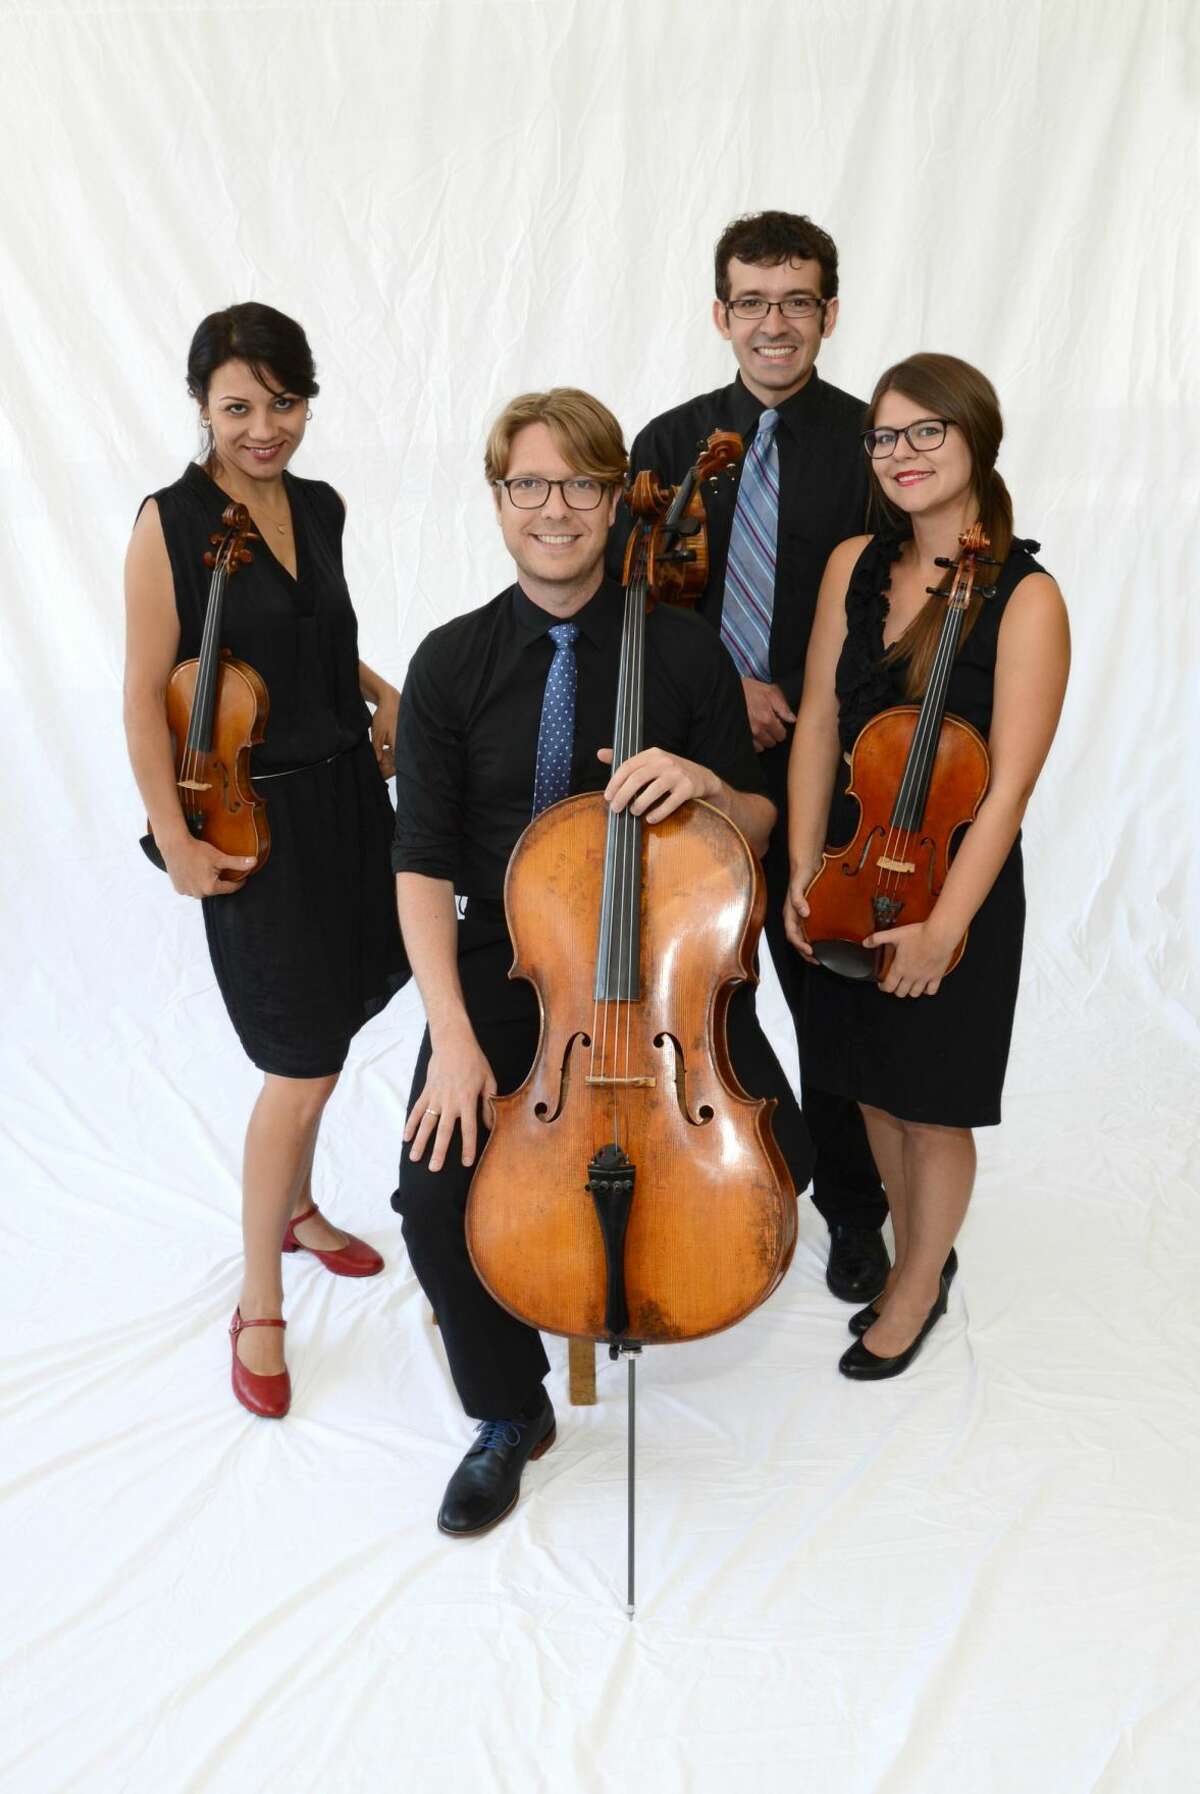 The Haven String Quartet will perform Saturday night in Hamden.